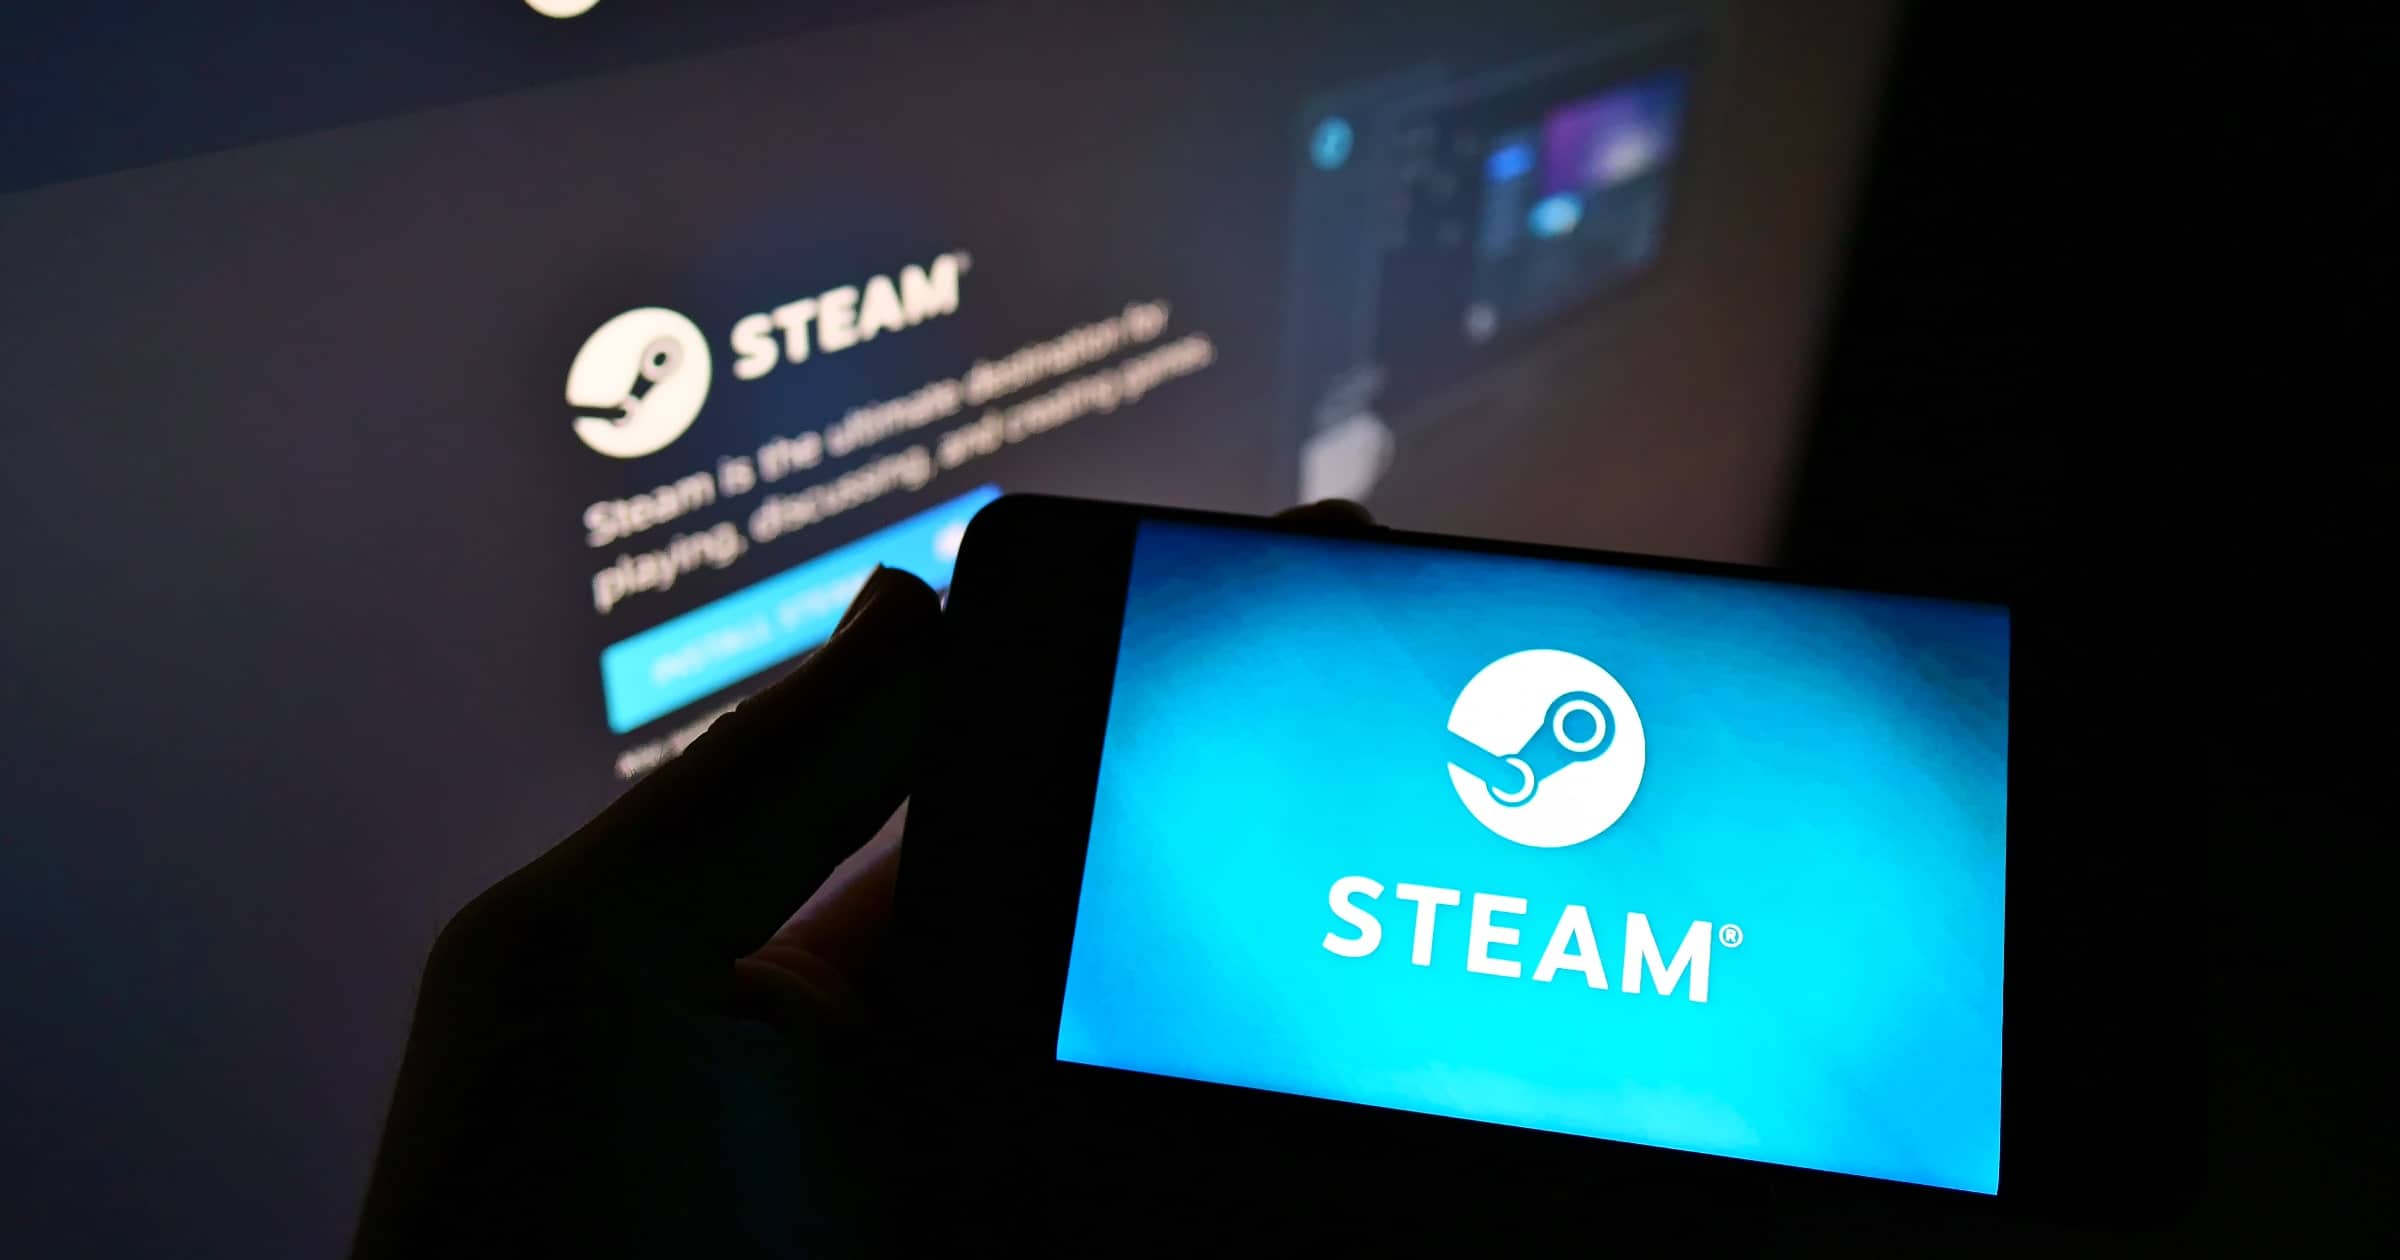 Steam gaming website on smartphone.